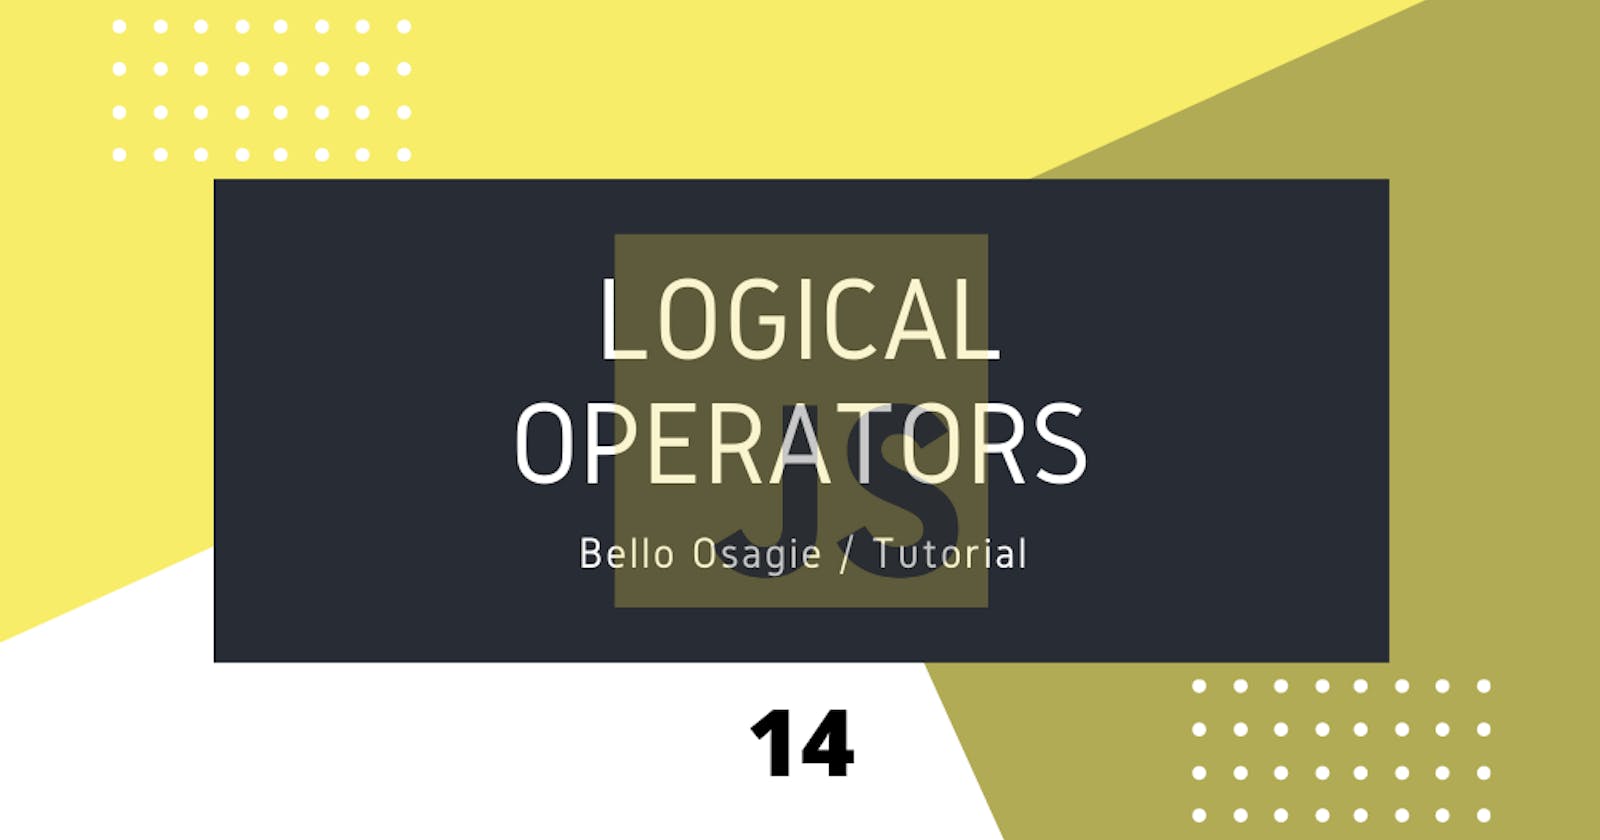 JavaScript Logical Operators